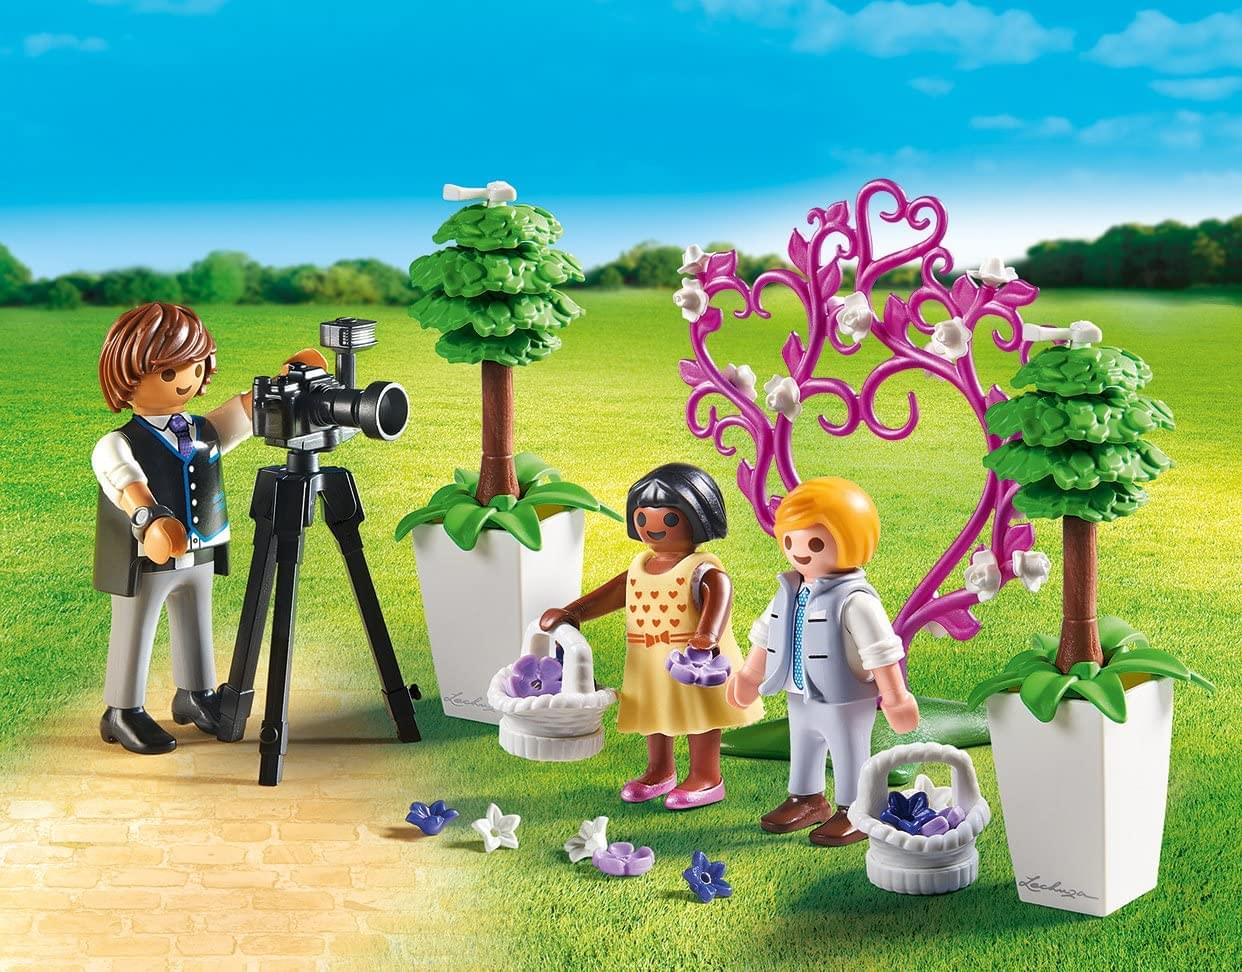 Playmobil City Life 9230 Children and Photographer Playset